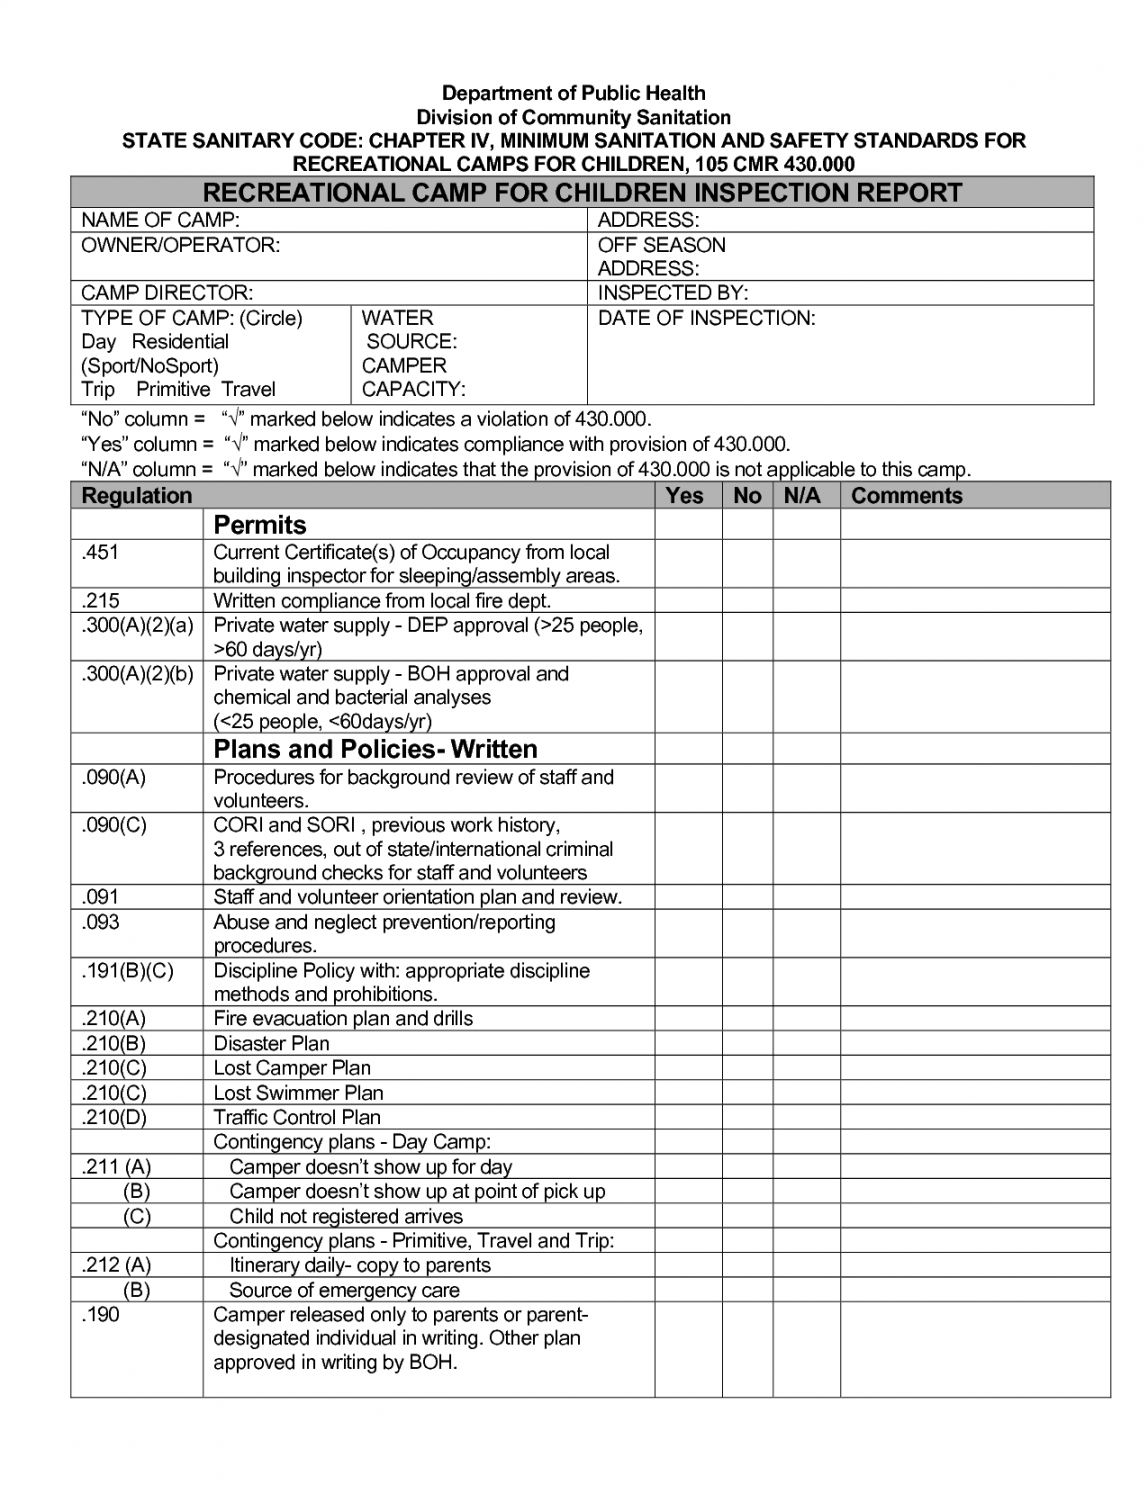 property maintenance checklist template